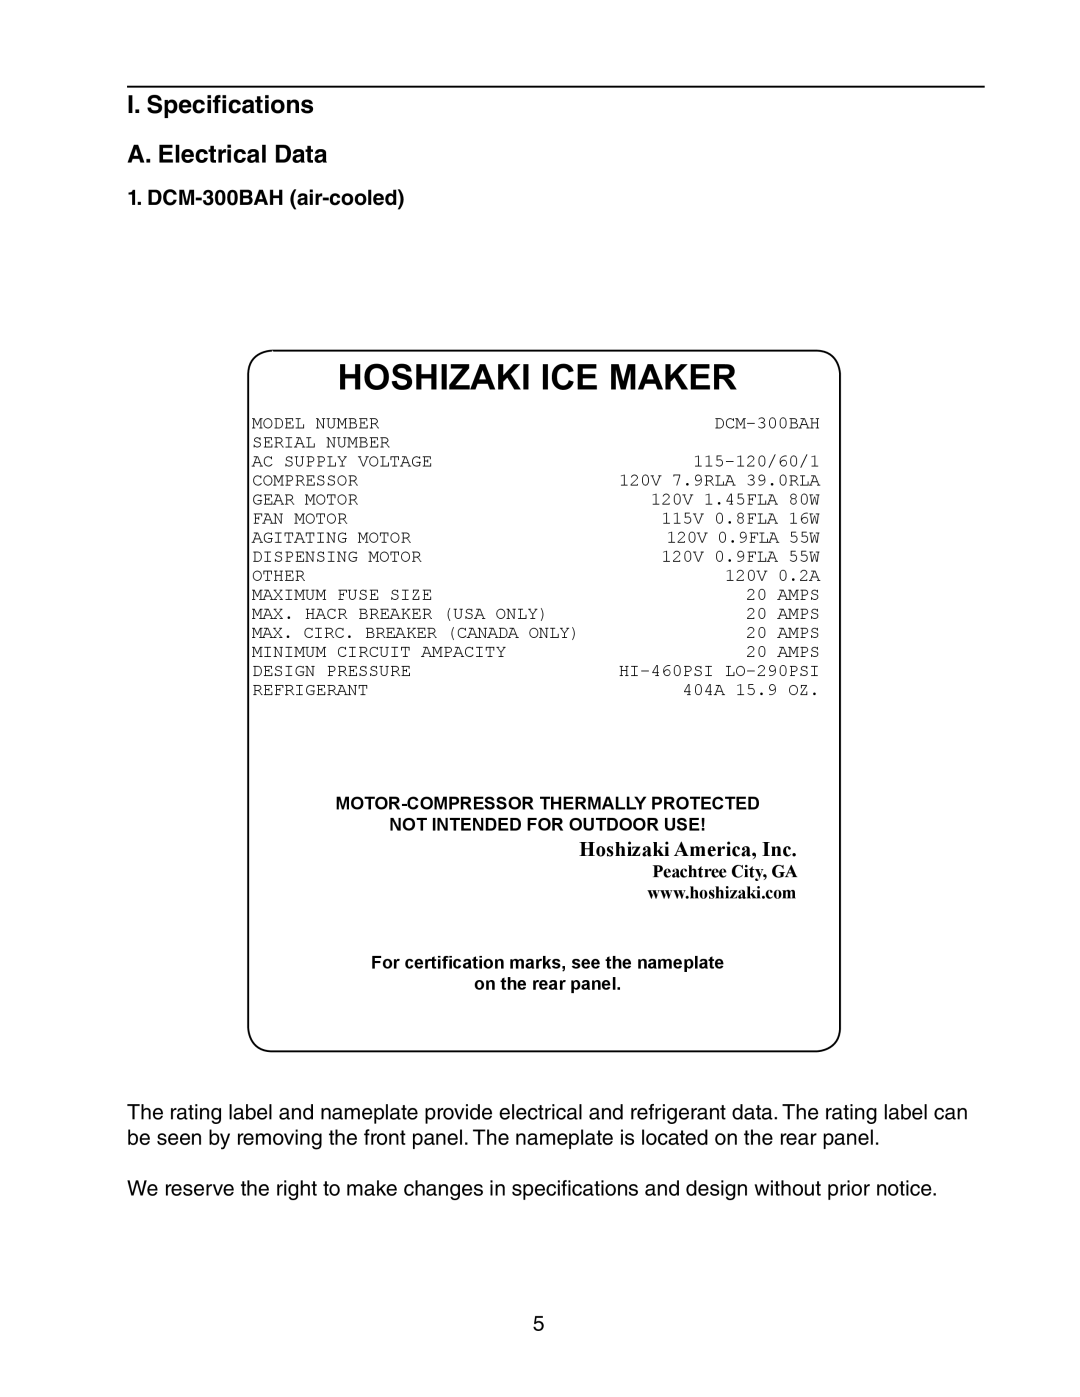 Hoshizaki DCM-300BAH(-OS) Hoshizaki Ice Maker, I. Specifications A. Electrical Data, DCM-300BAH air-cooled 